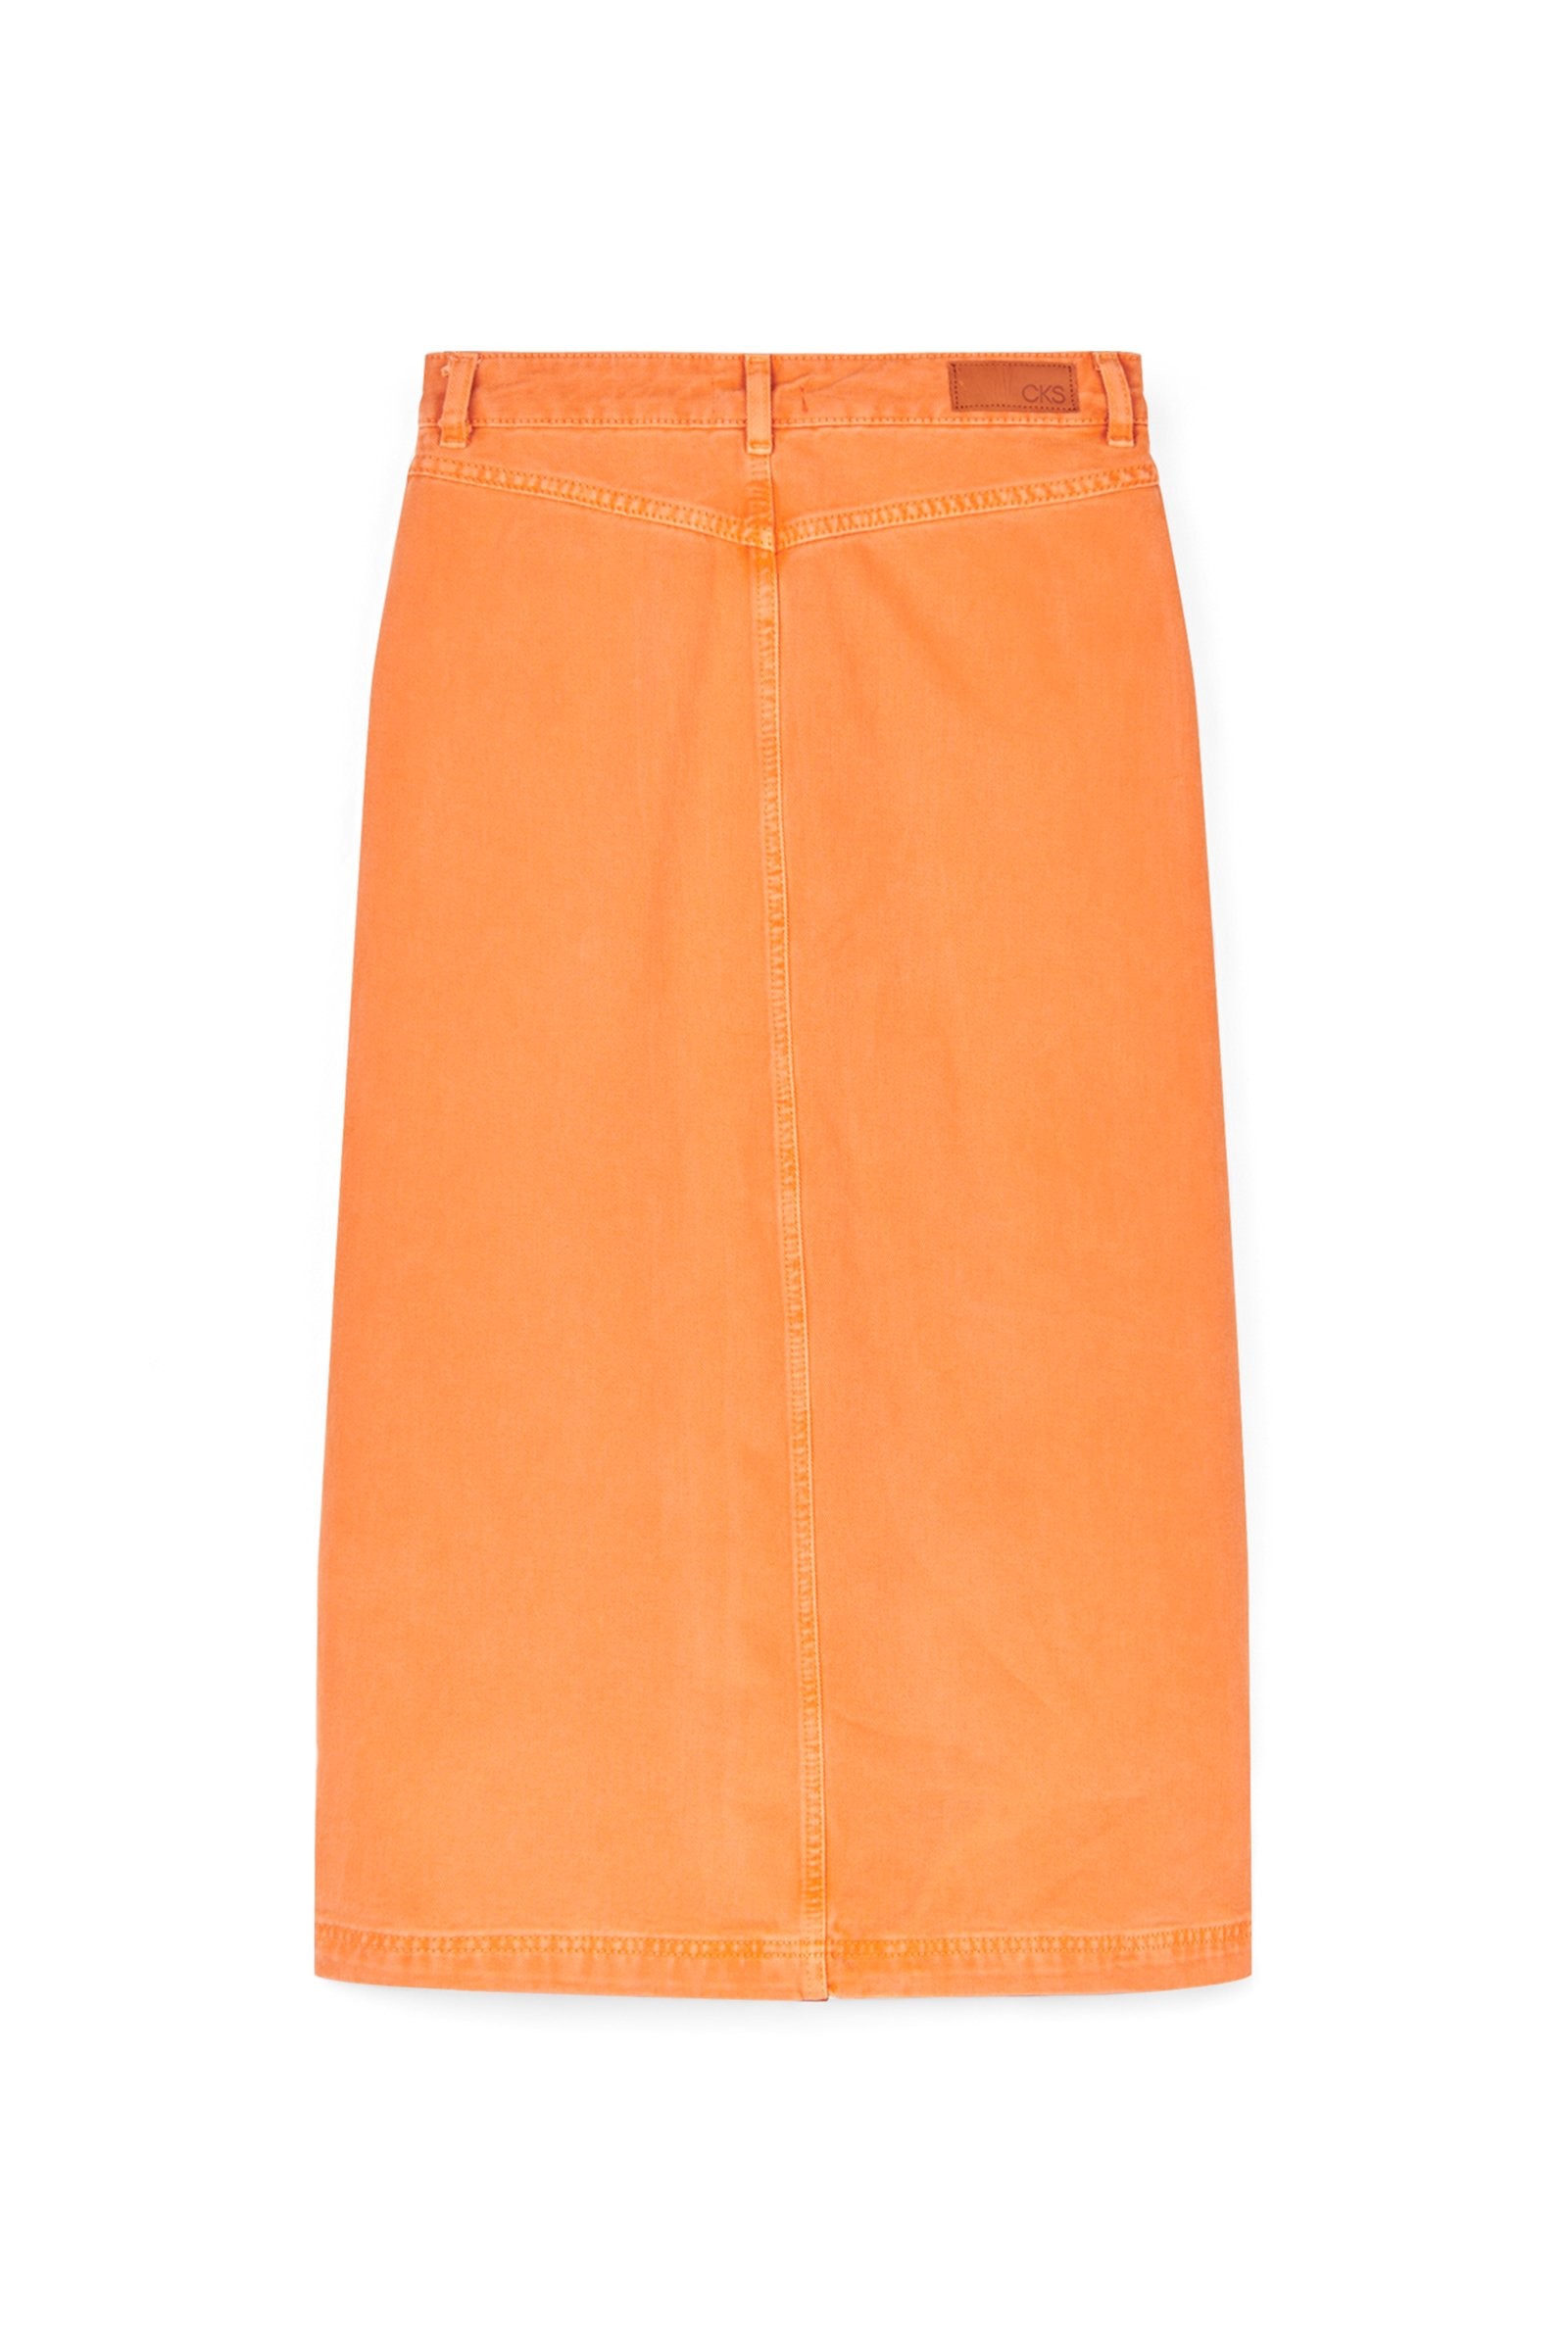 CKS Dames - FANTASIE - jupe longue - orange foncé